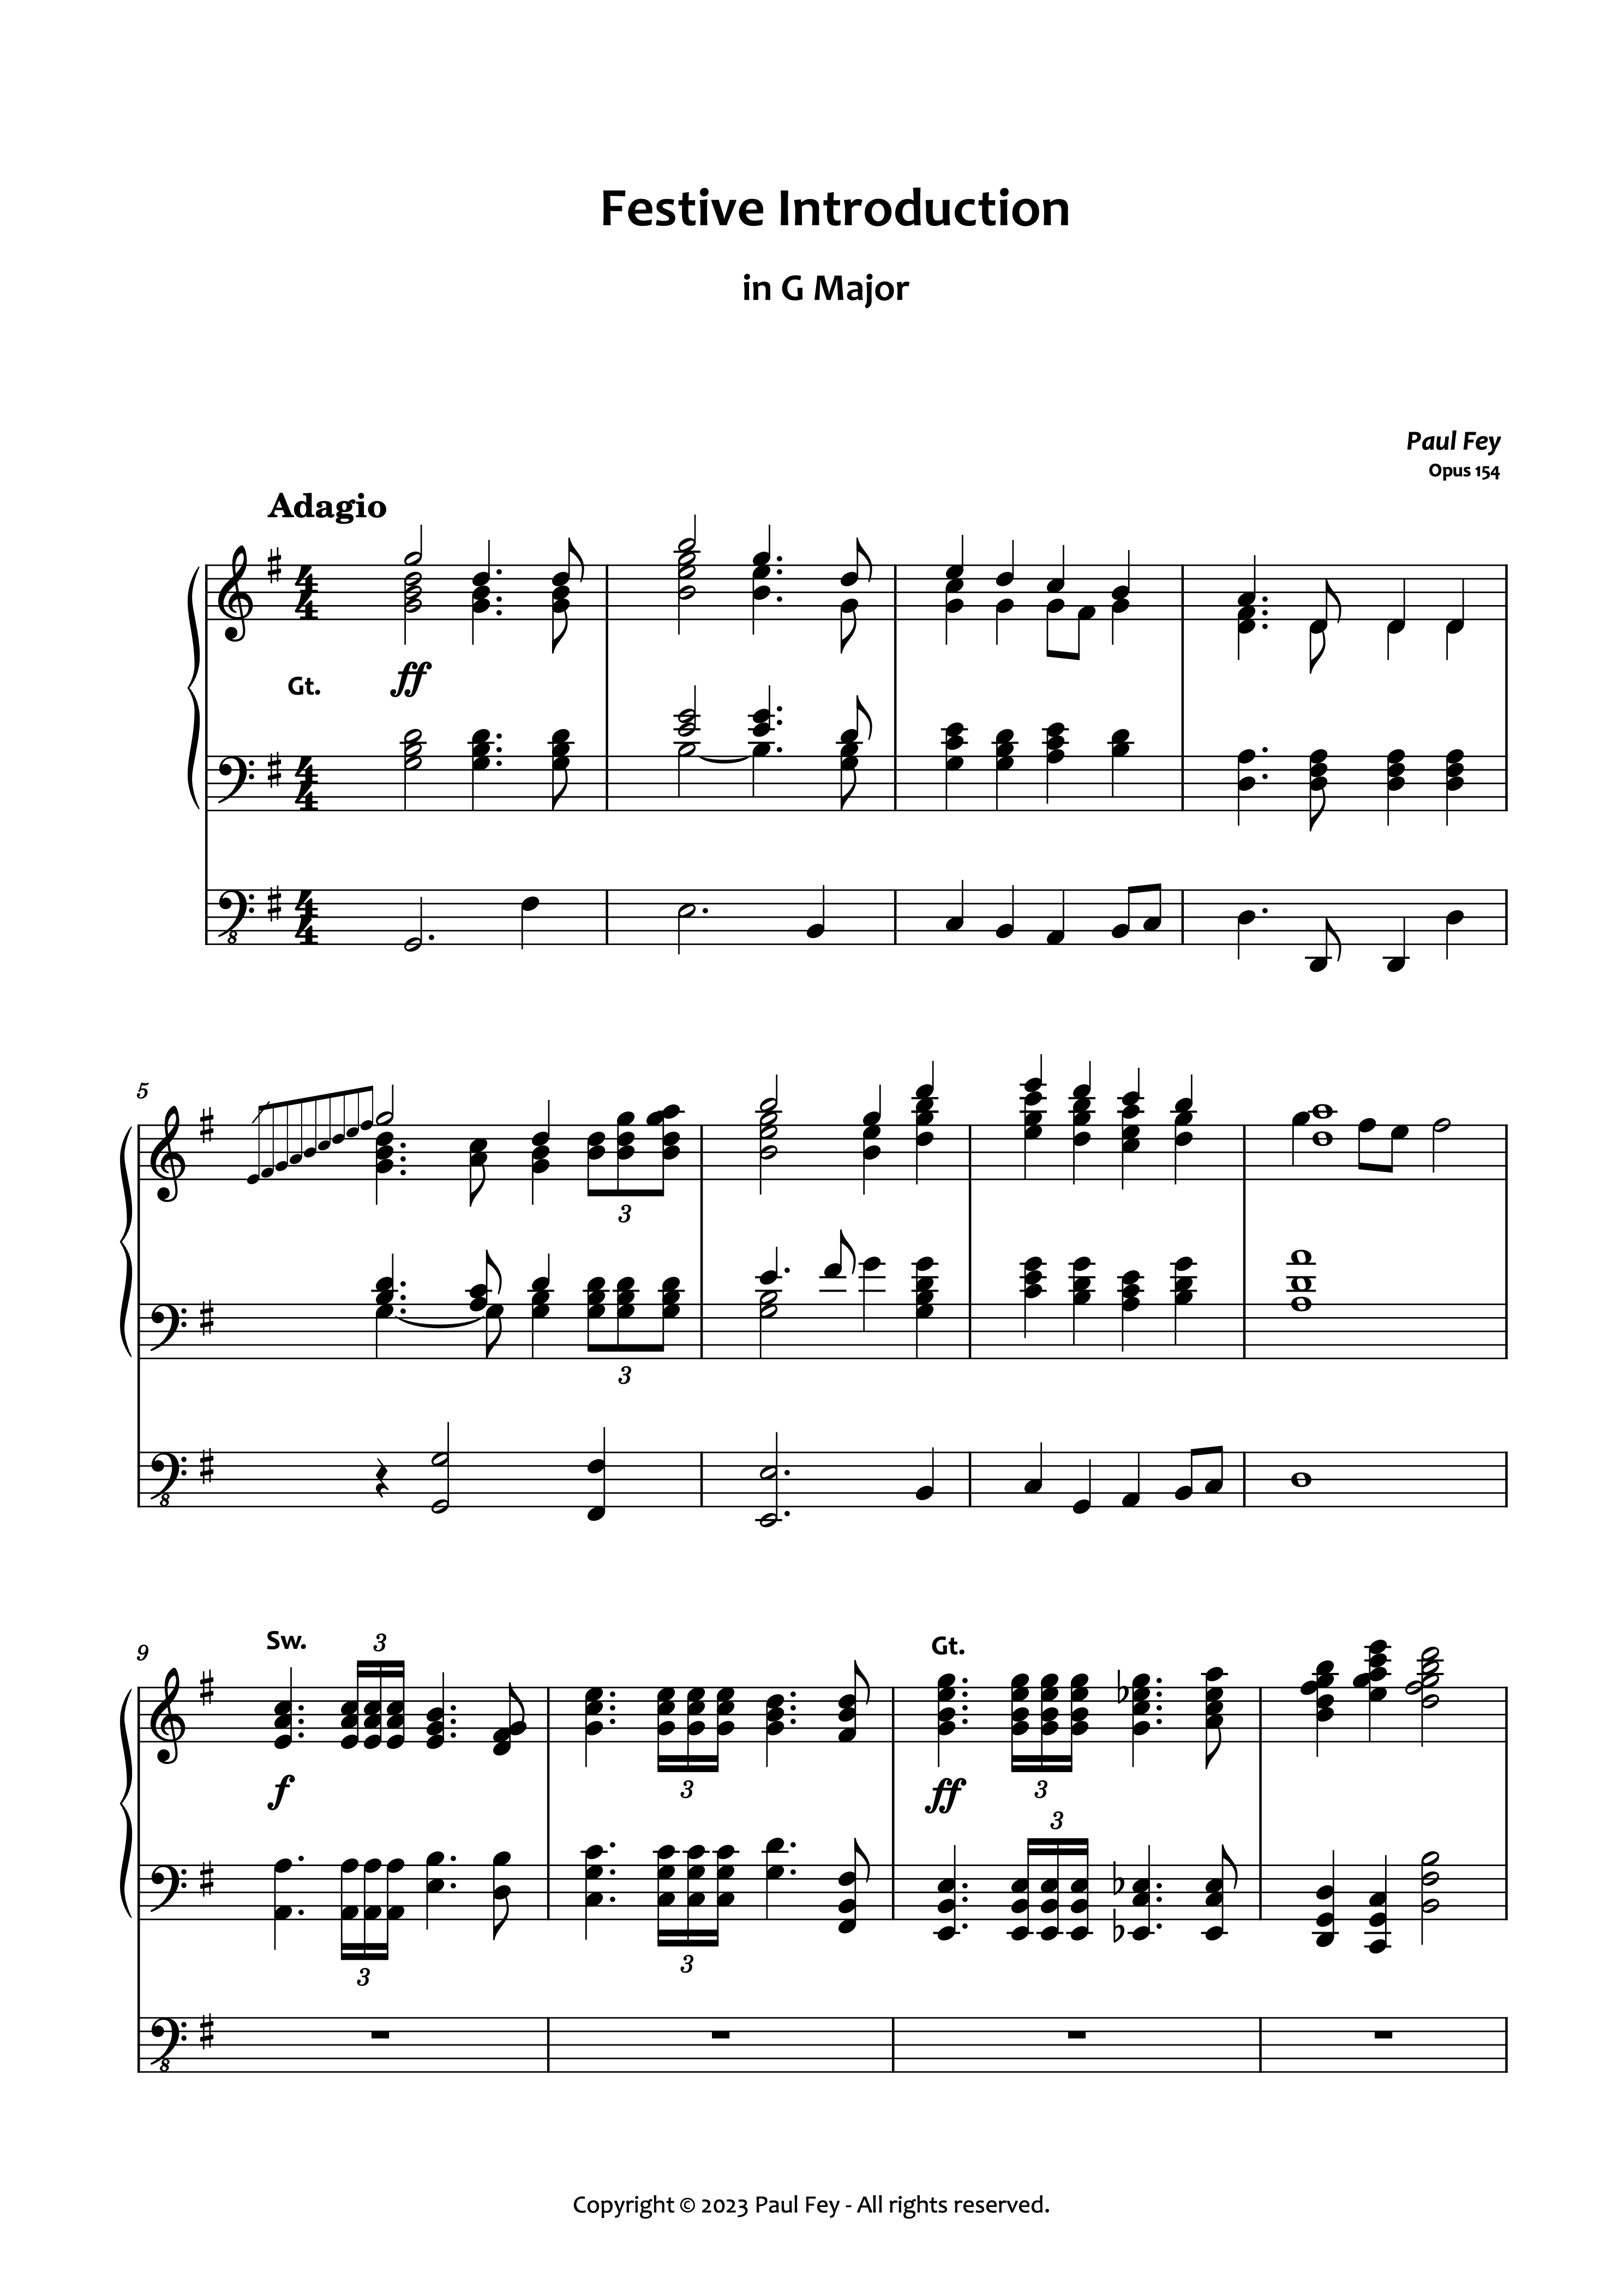 Festive Introduction in D Major Organ Sheet Music by Paul Fey Organist & Pianist.